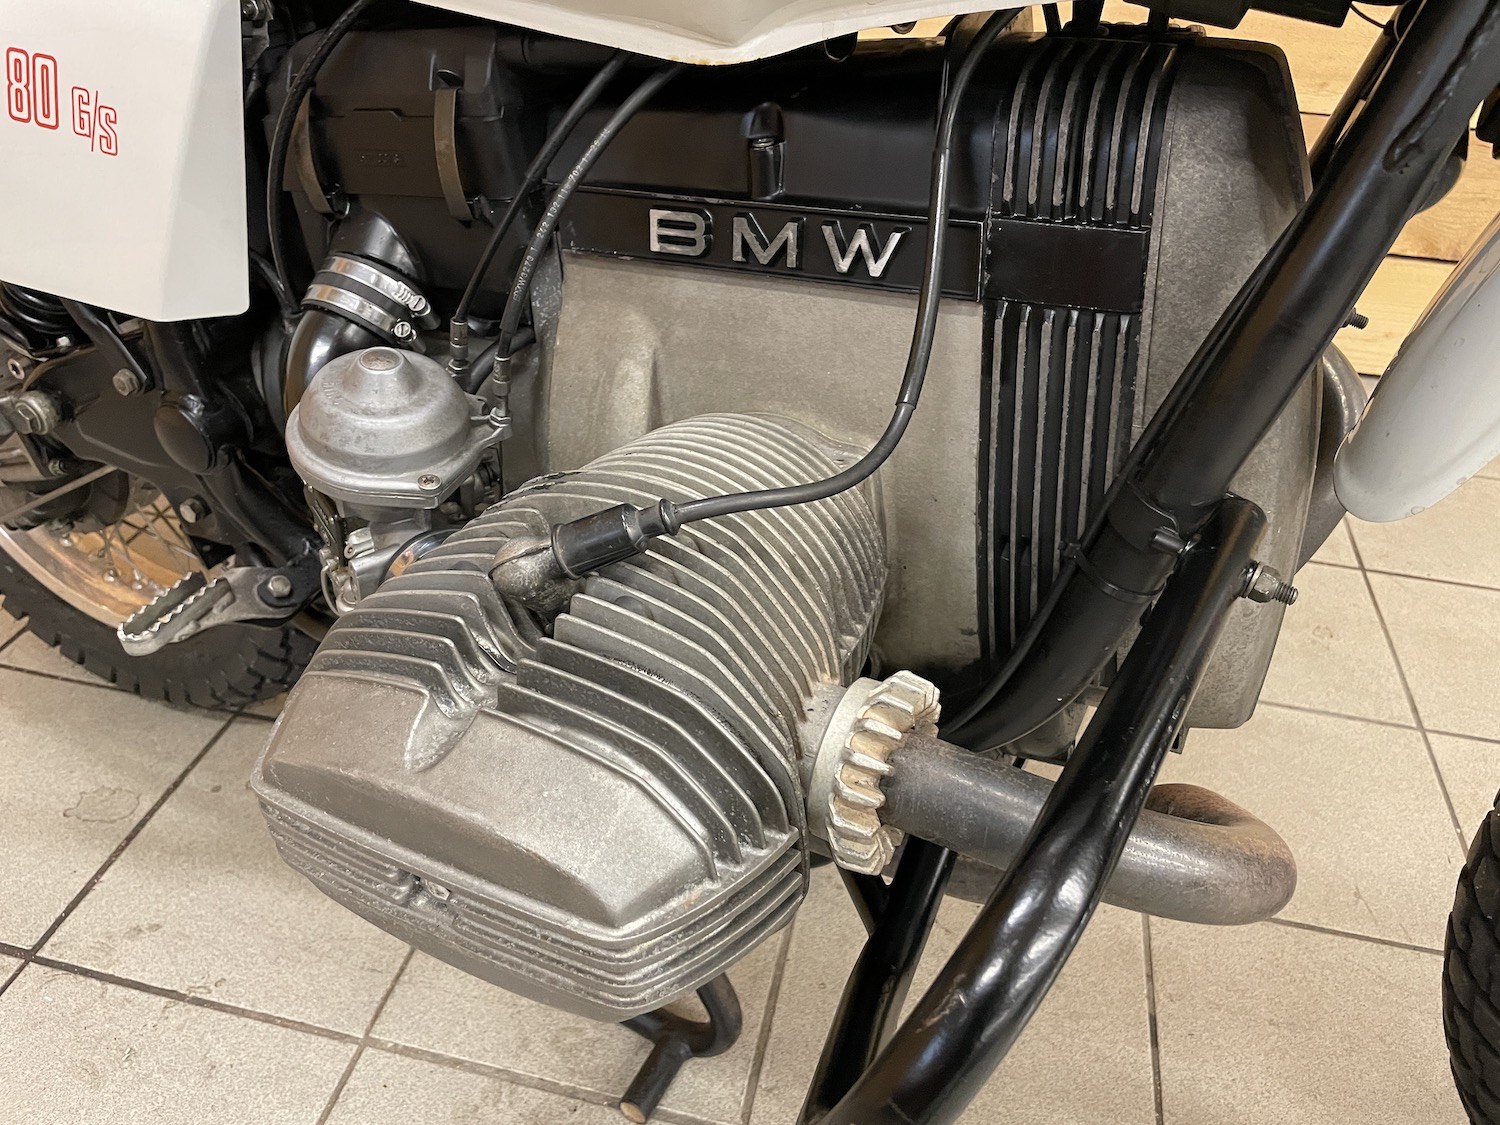 BMW_R80GS_cezanne_classic_motorcycle_2-115.jpg